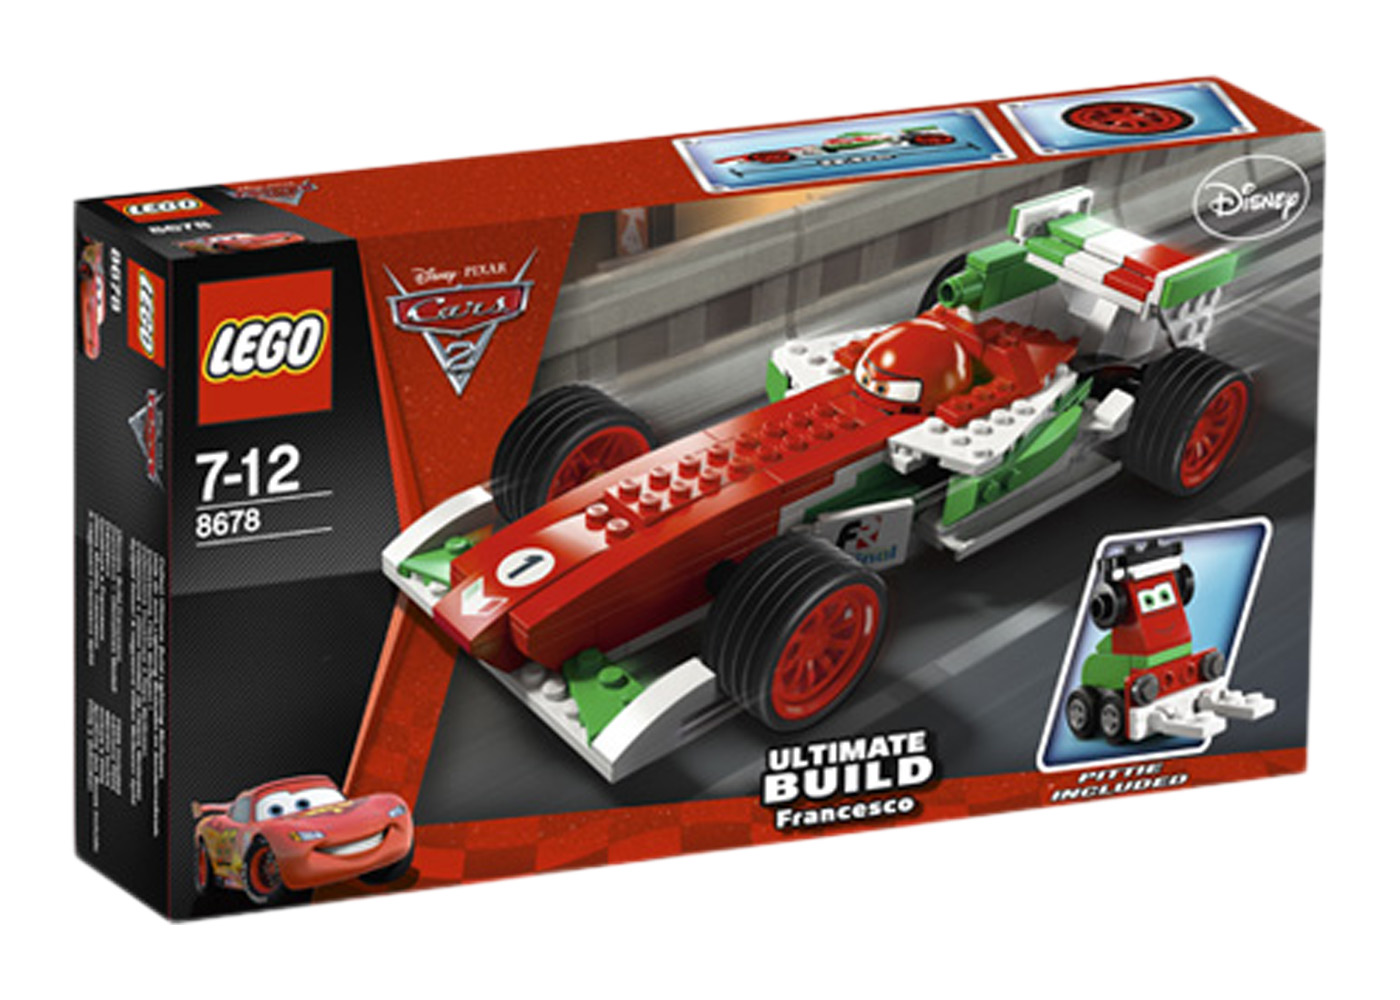 LEGO Cars 2 Ultimate Build Francesco Set 8678 - US